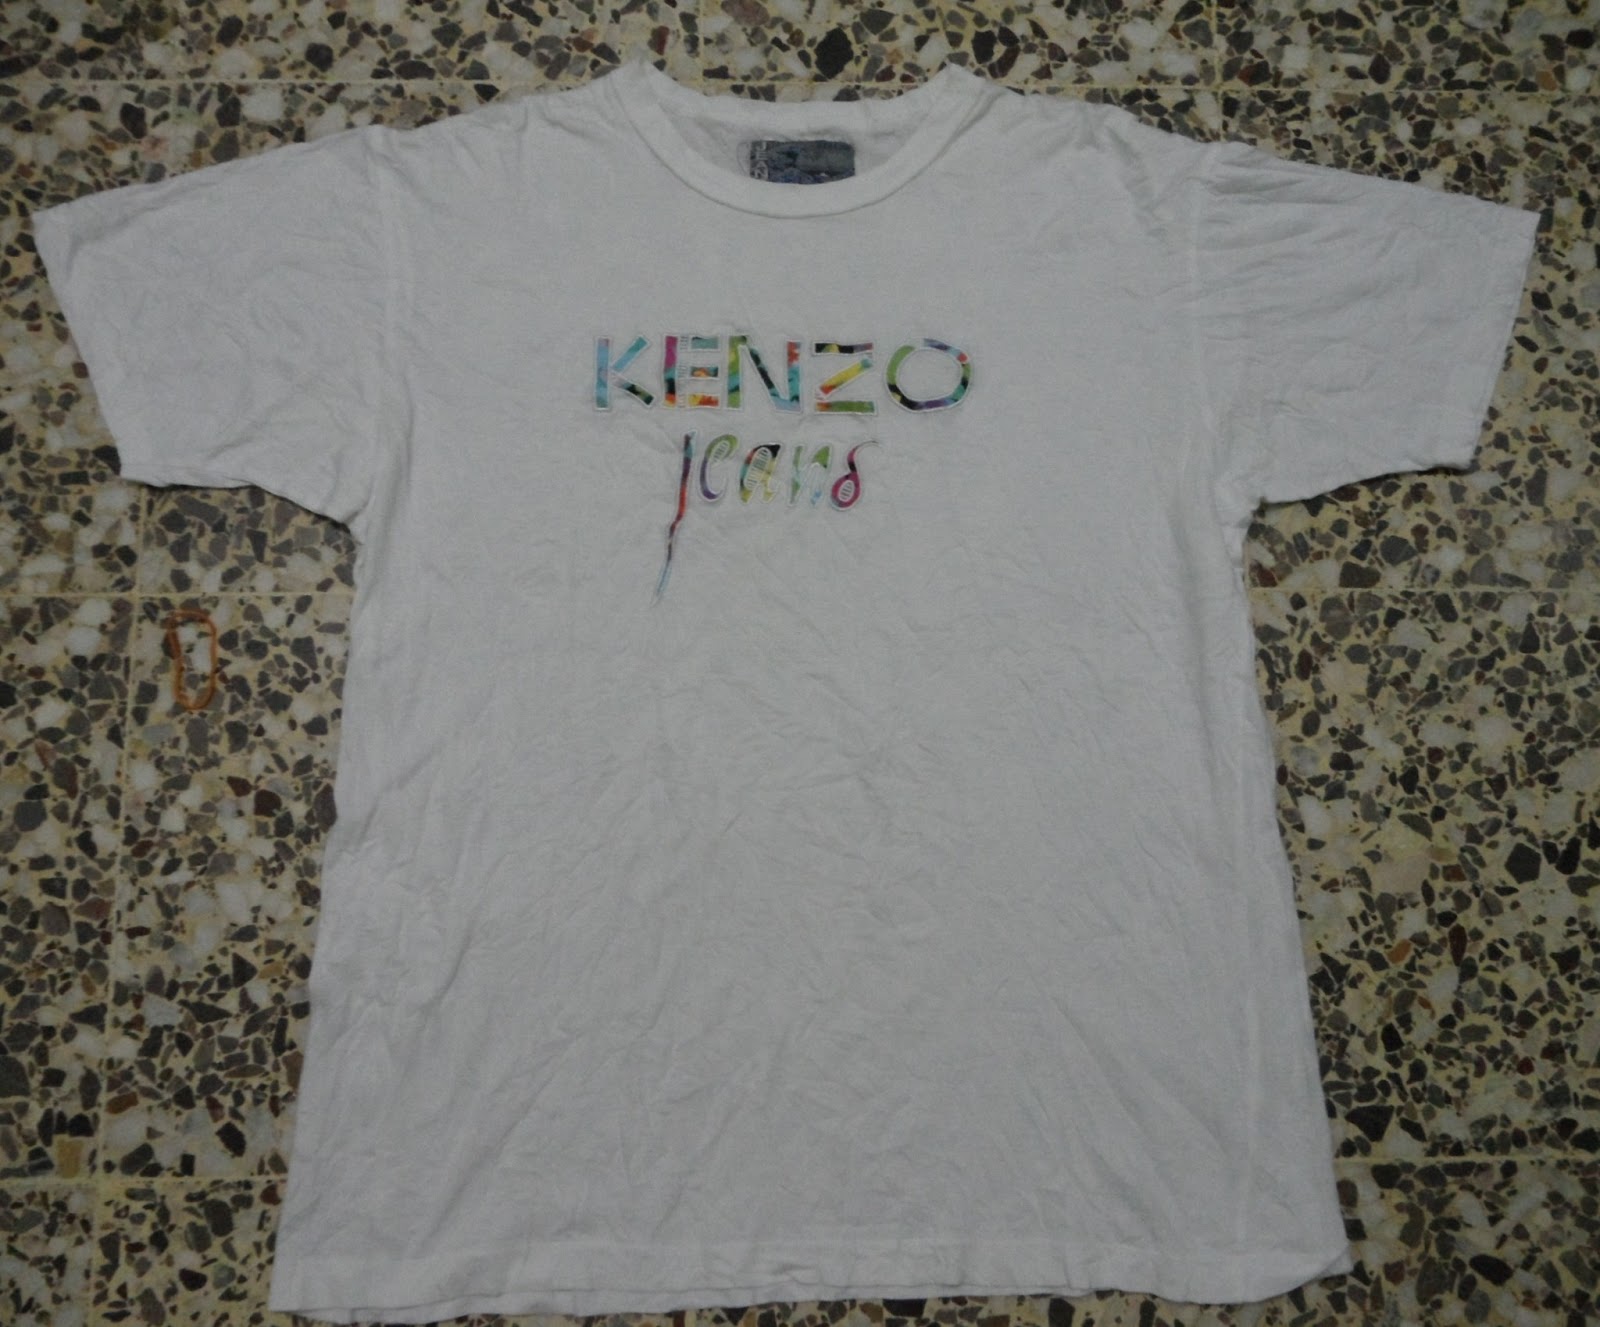 kenzo jeans t shirt